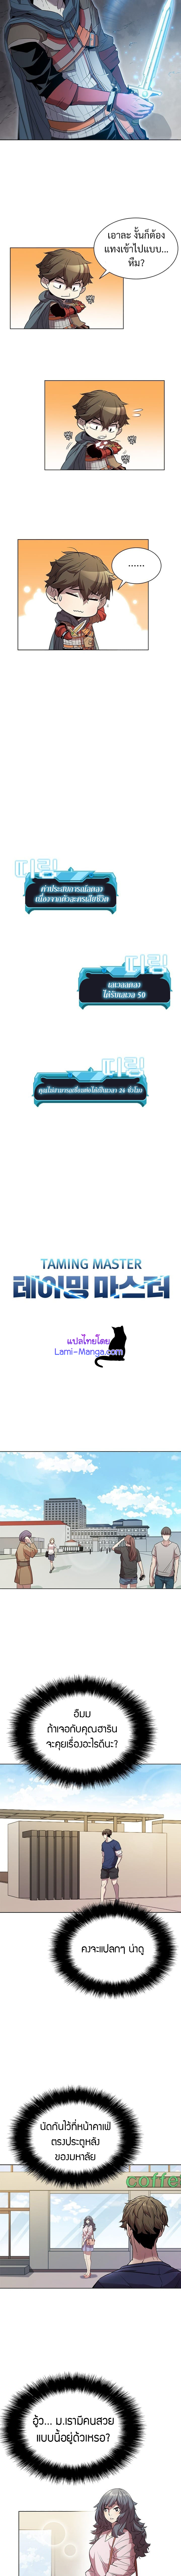 Taming Master28 02